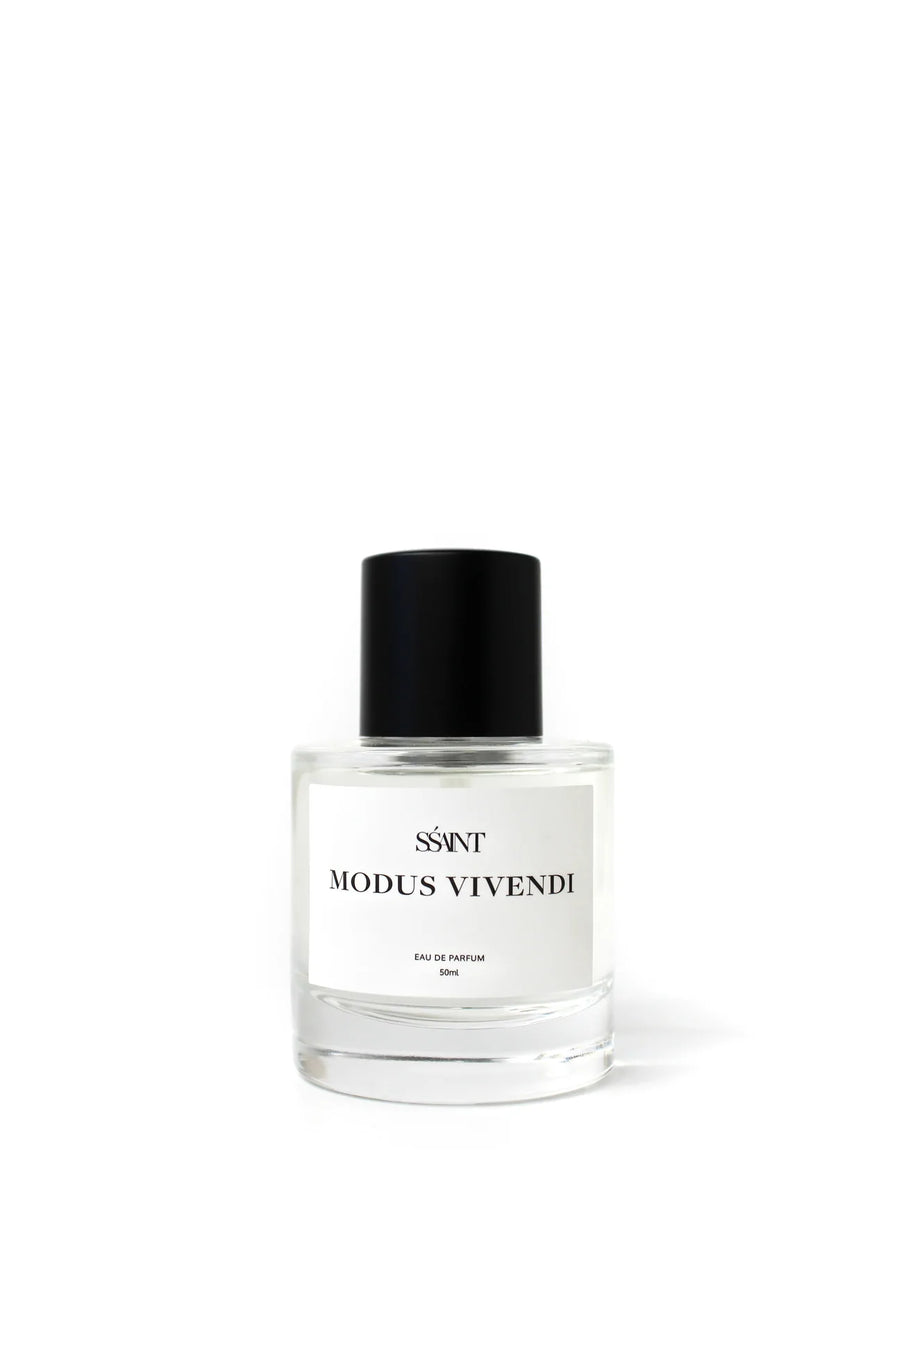 Ssaint Modus Vivendi Perfume